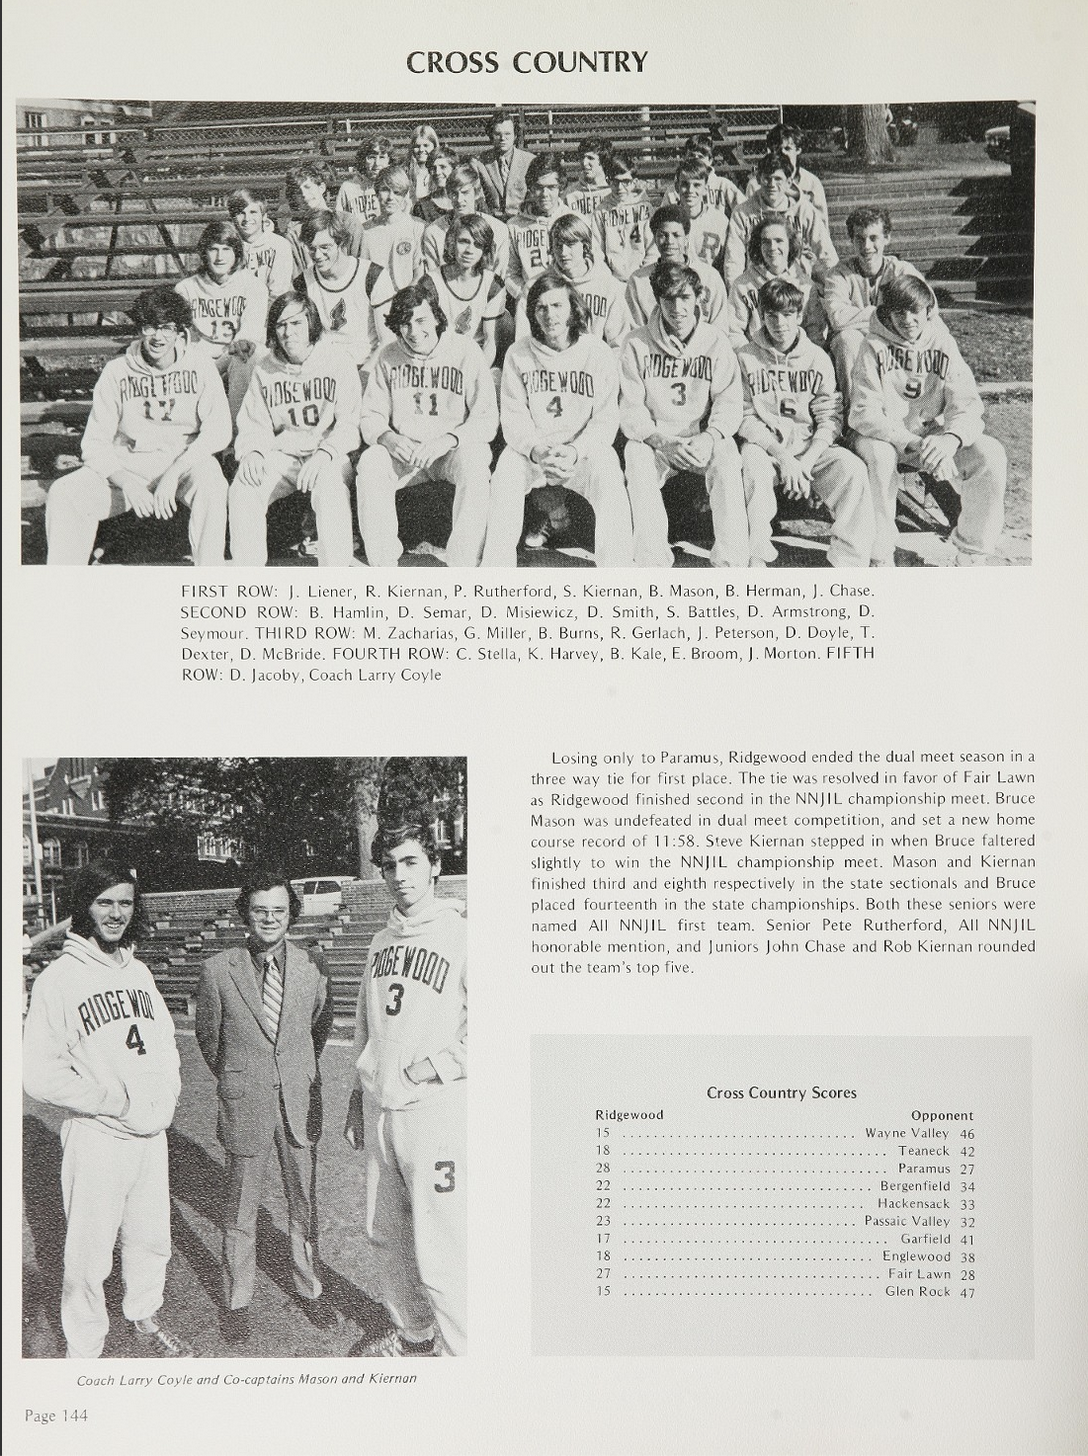 1972 Boys’ Cross Country Team